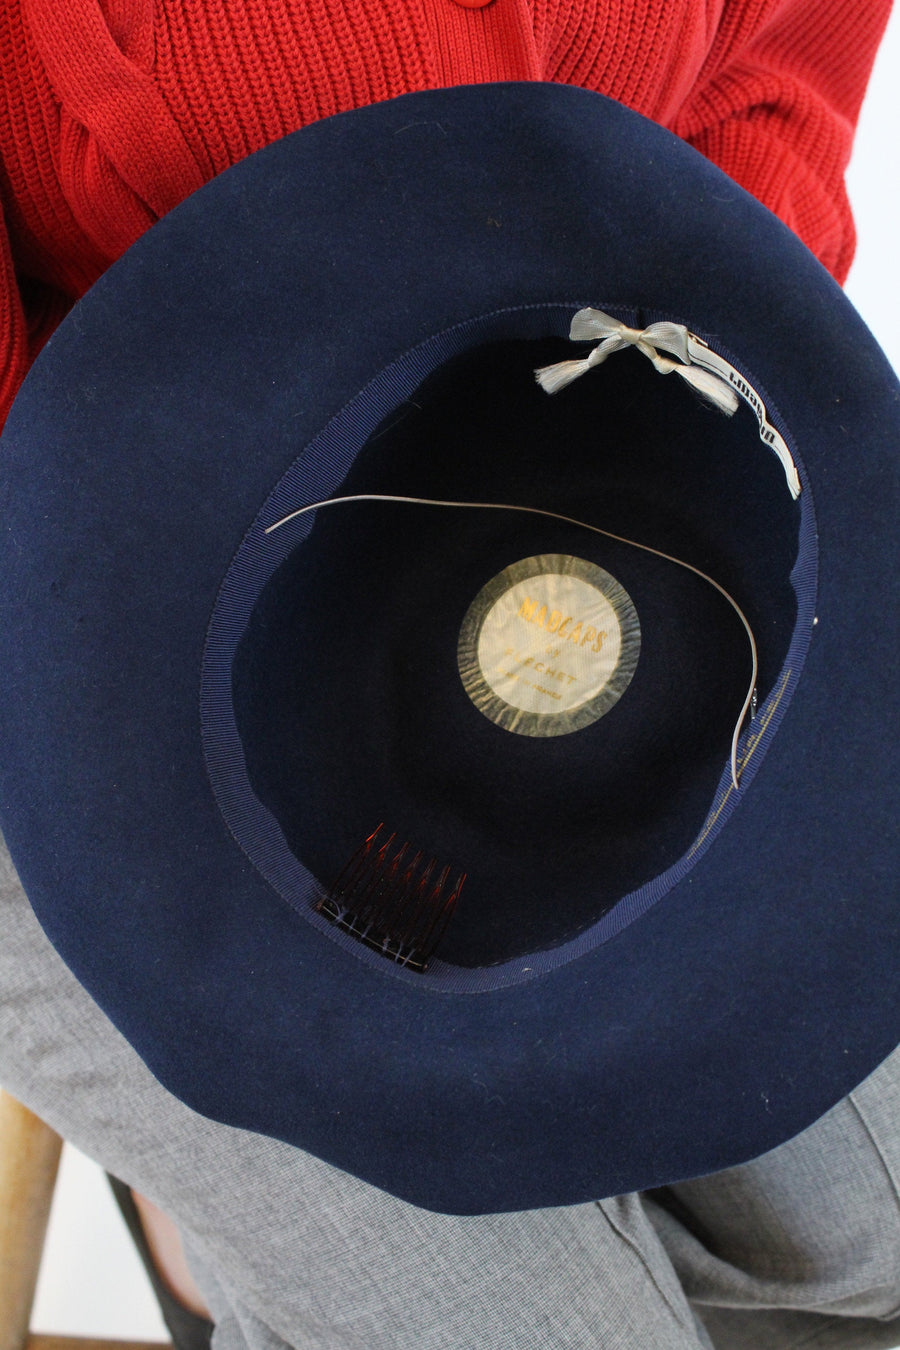 1980s felt hat | western hat | I. Magnin fedora